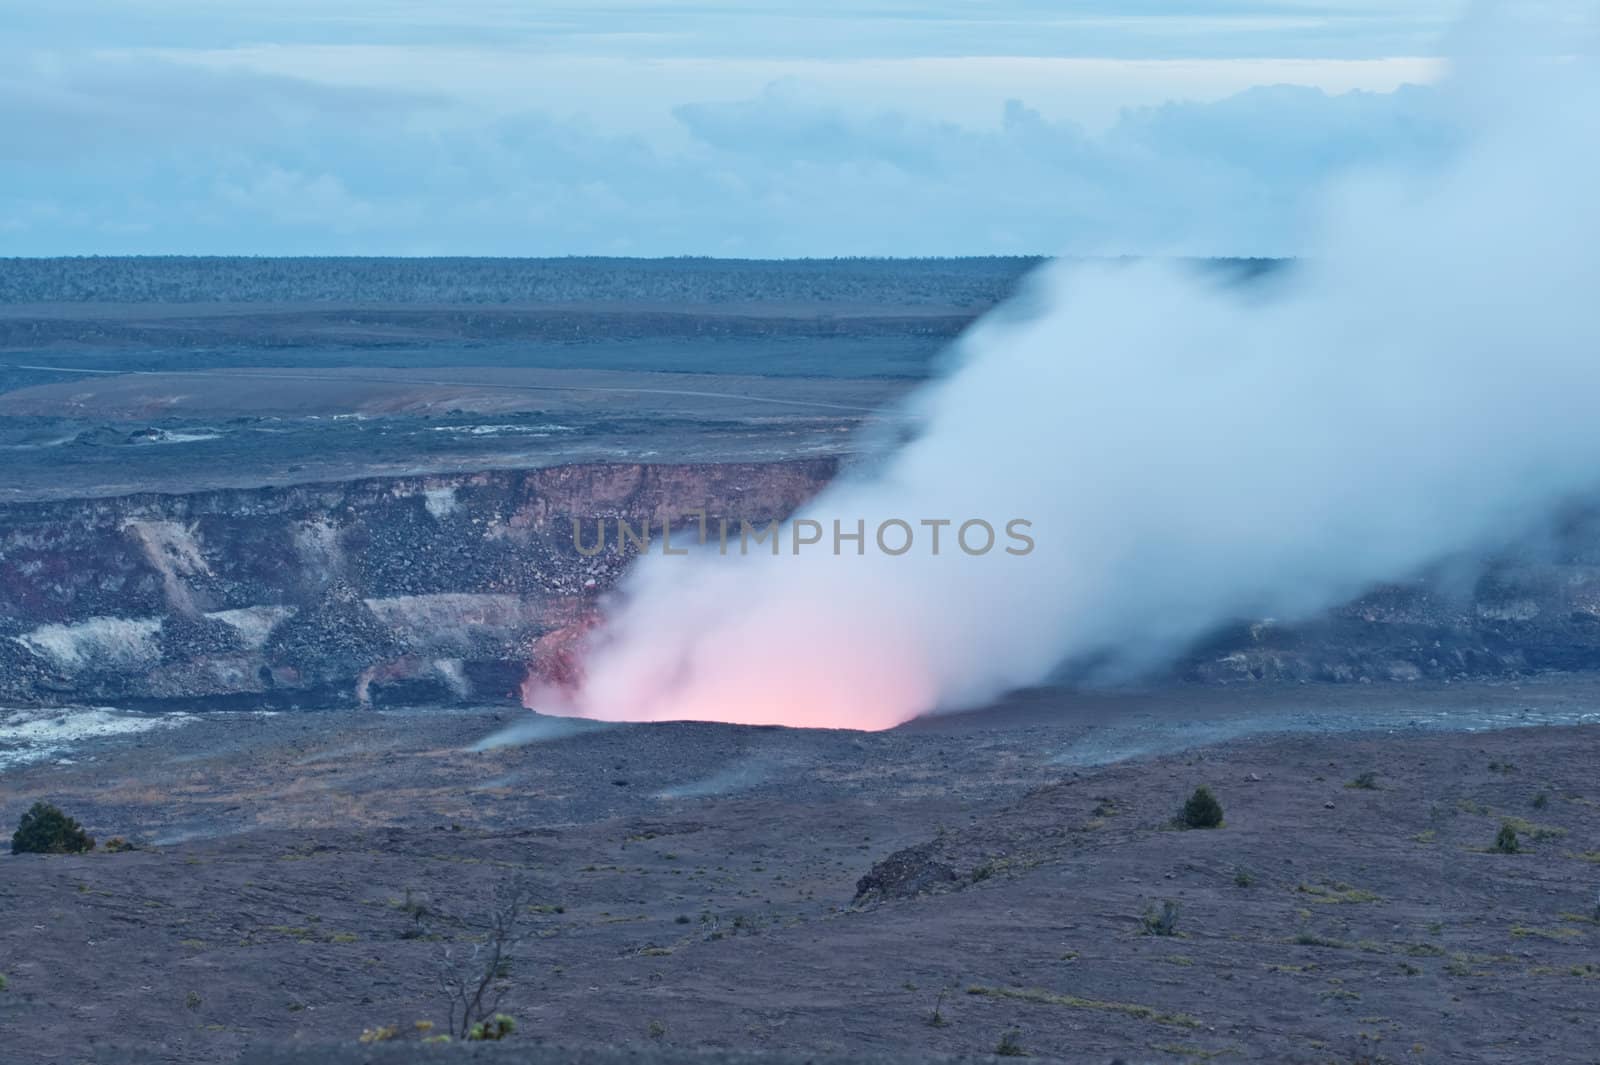 the Halema'uma'u crater in the Kilauea Caldera. Located in the Volcano National Park on the Big Island of Hawaii